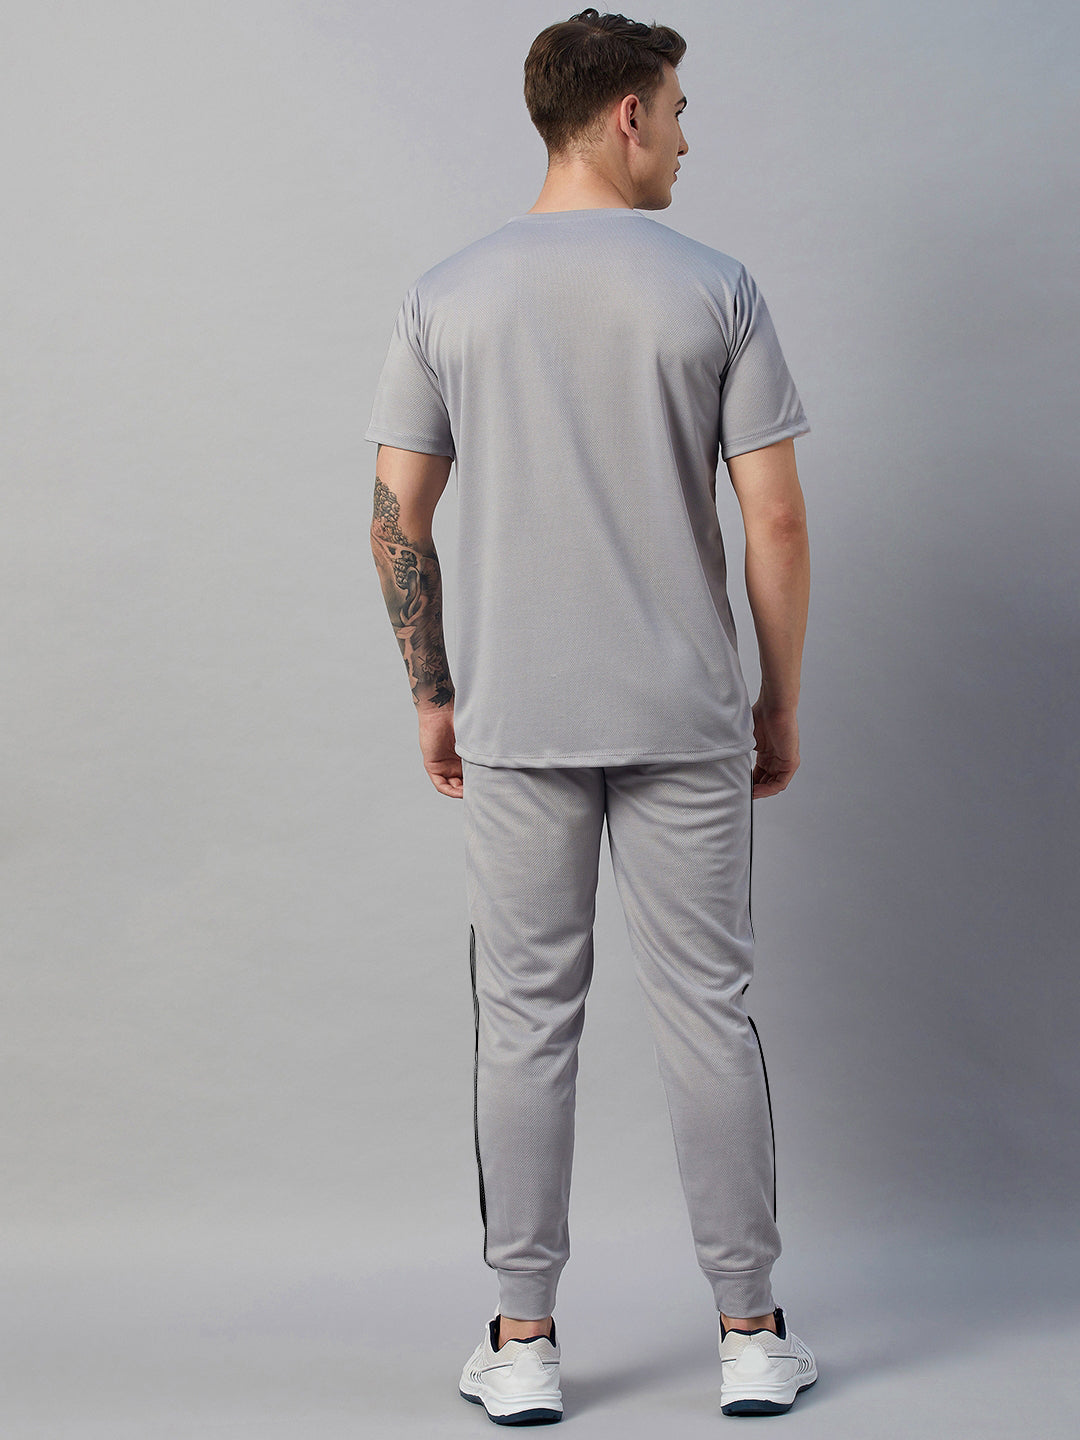 Men's Grey Co-ord Set (Tshirt |Track Pants Combo)